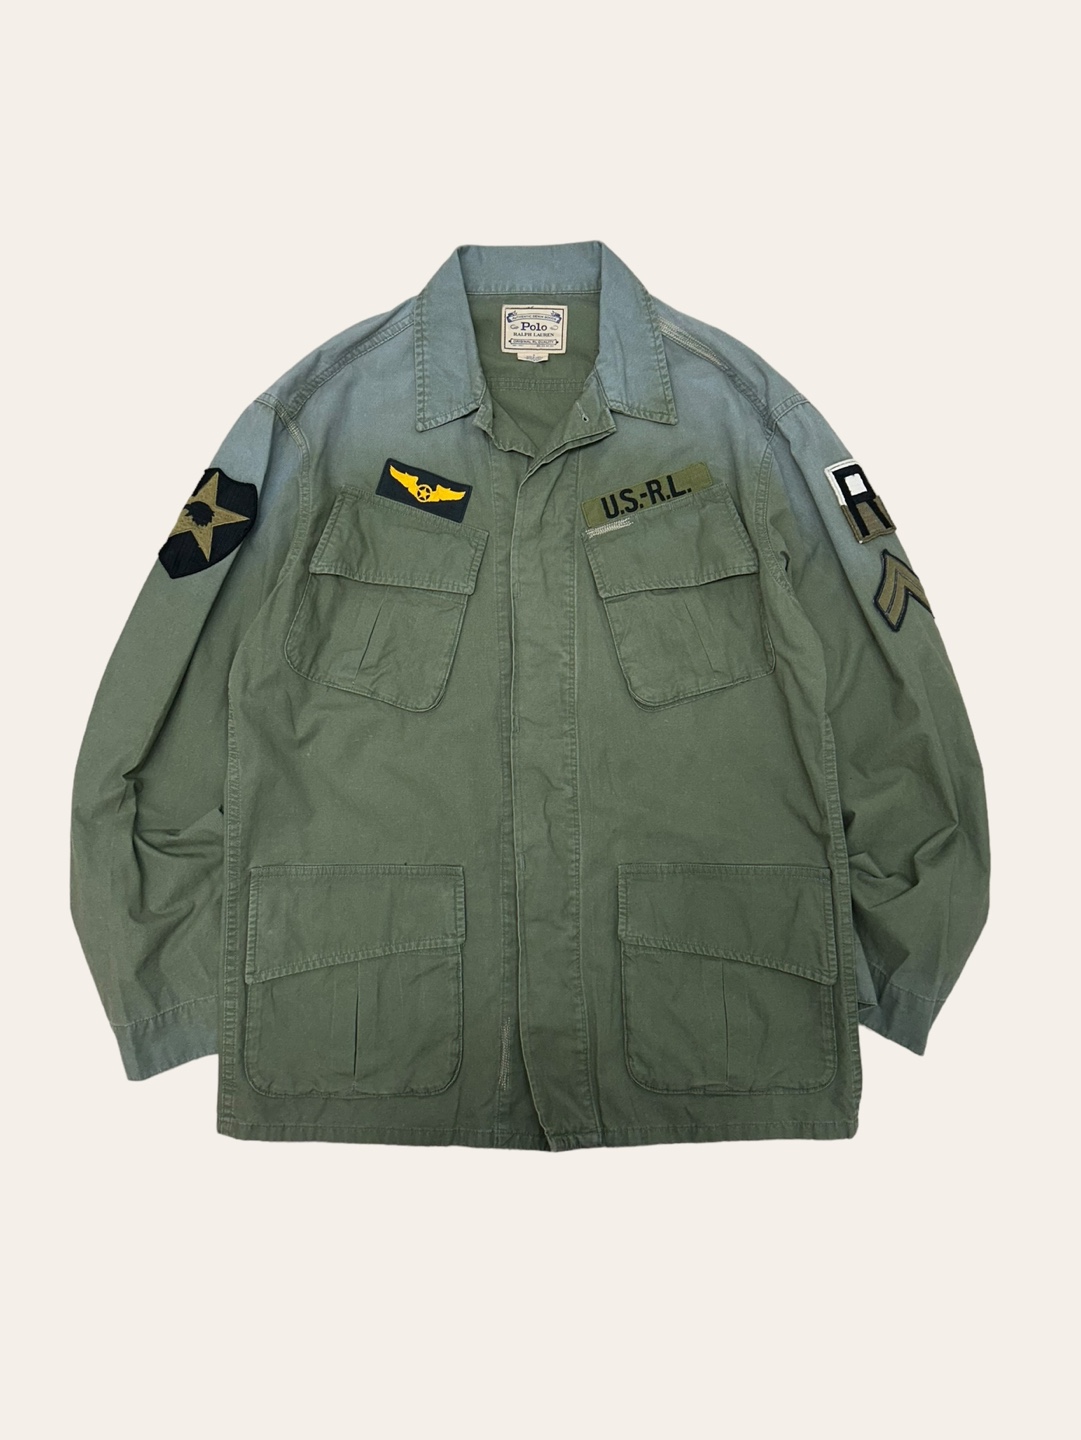 Polo ralph lauren khaki fatigue military overshirt jacket M